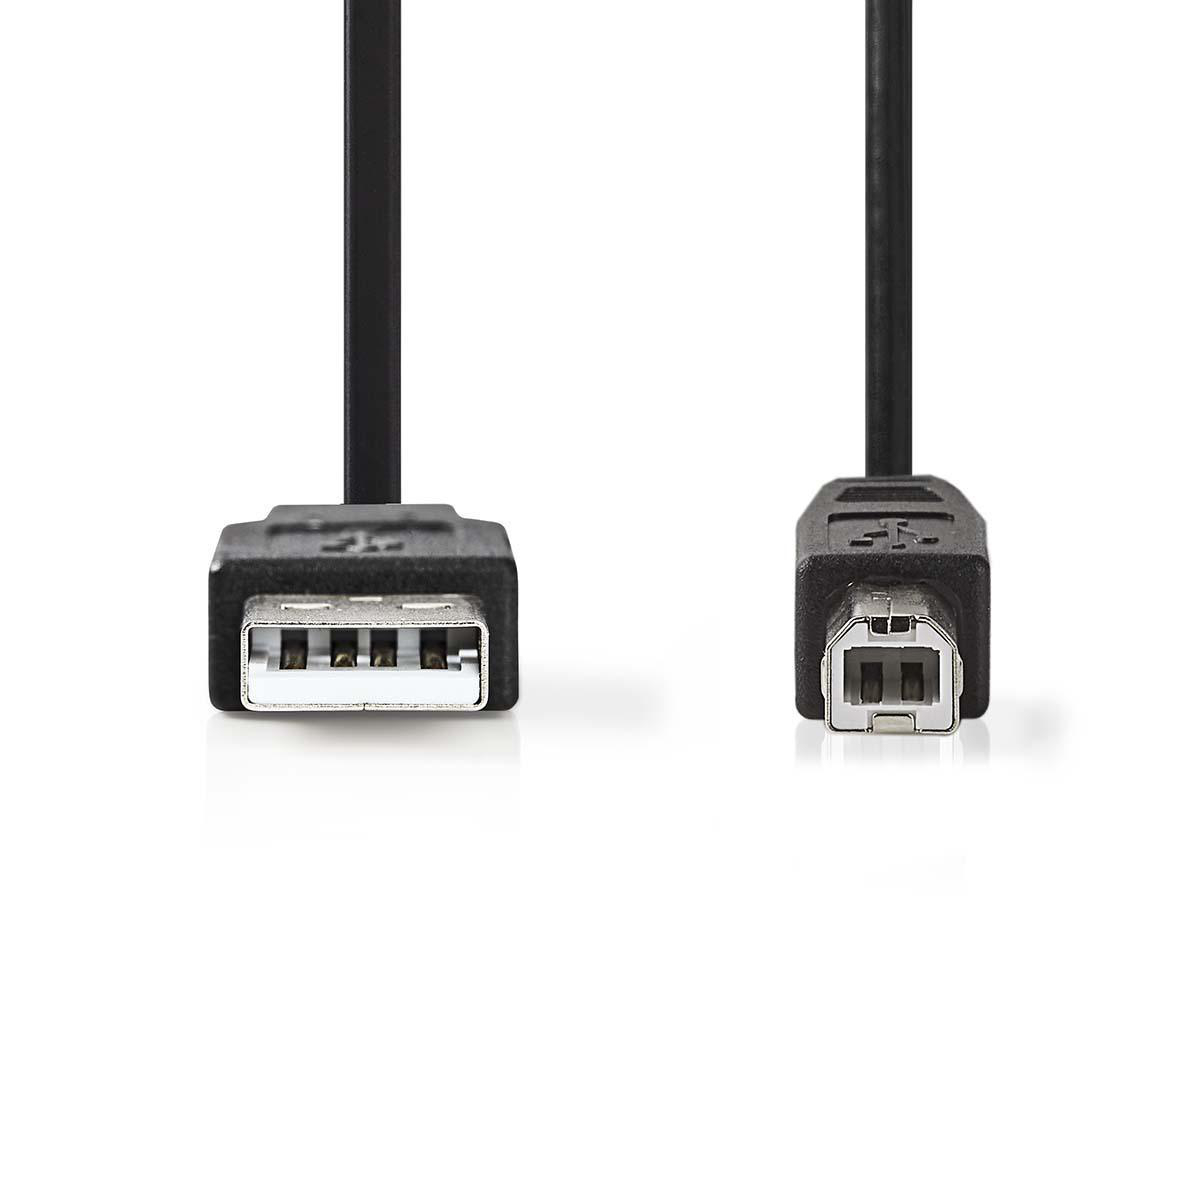 Nedis propojovací kabel USB 2.0 zástrčka USB A - zástrčka USB B, 1 m, černá (CCGP60100BK10)